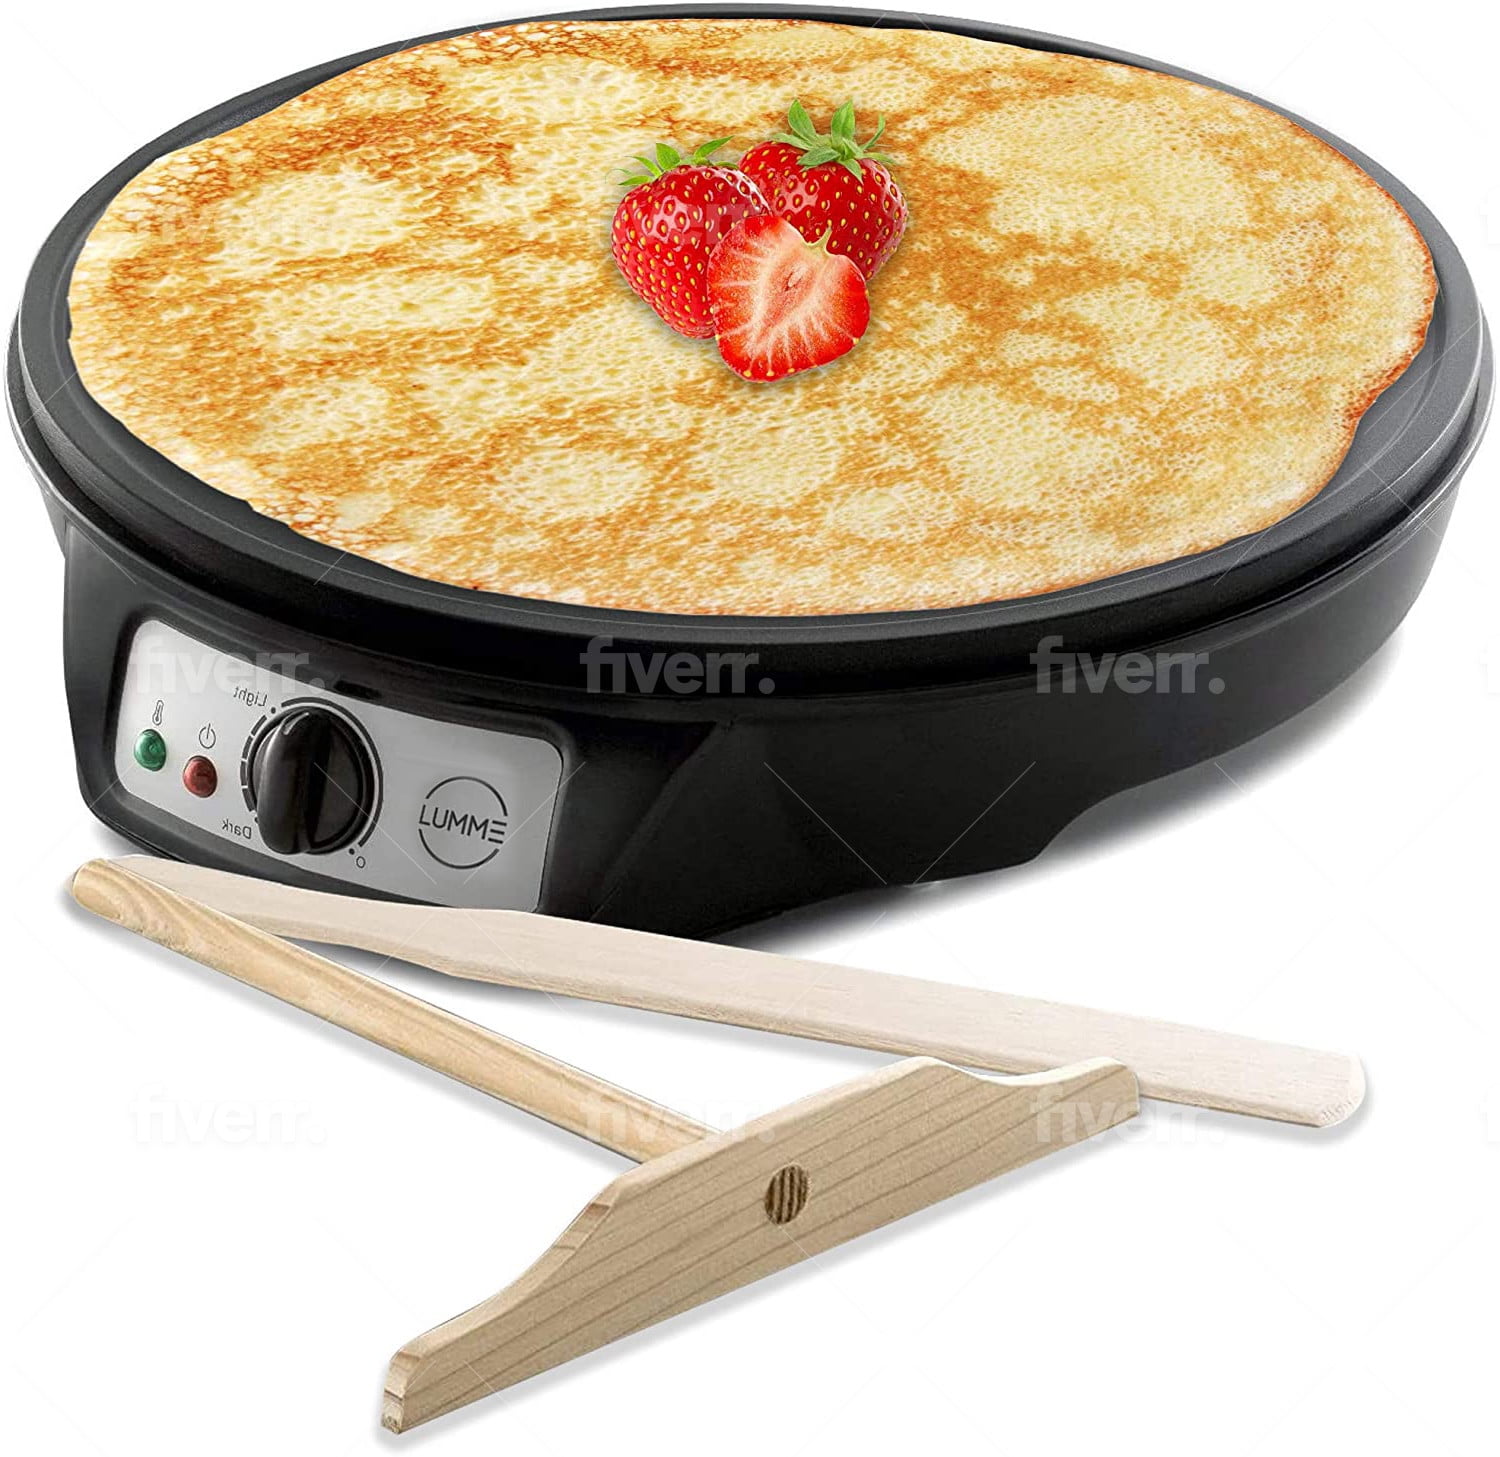 The MegaChef Crepe and Pancake Maker Breakfast Griddle 